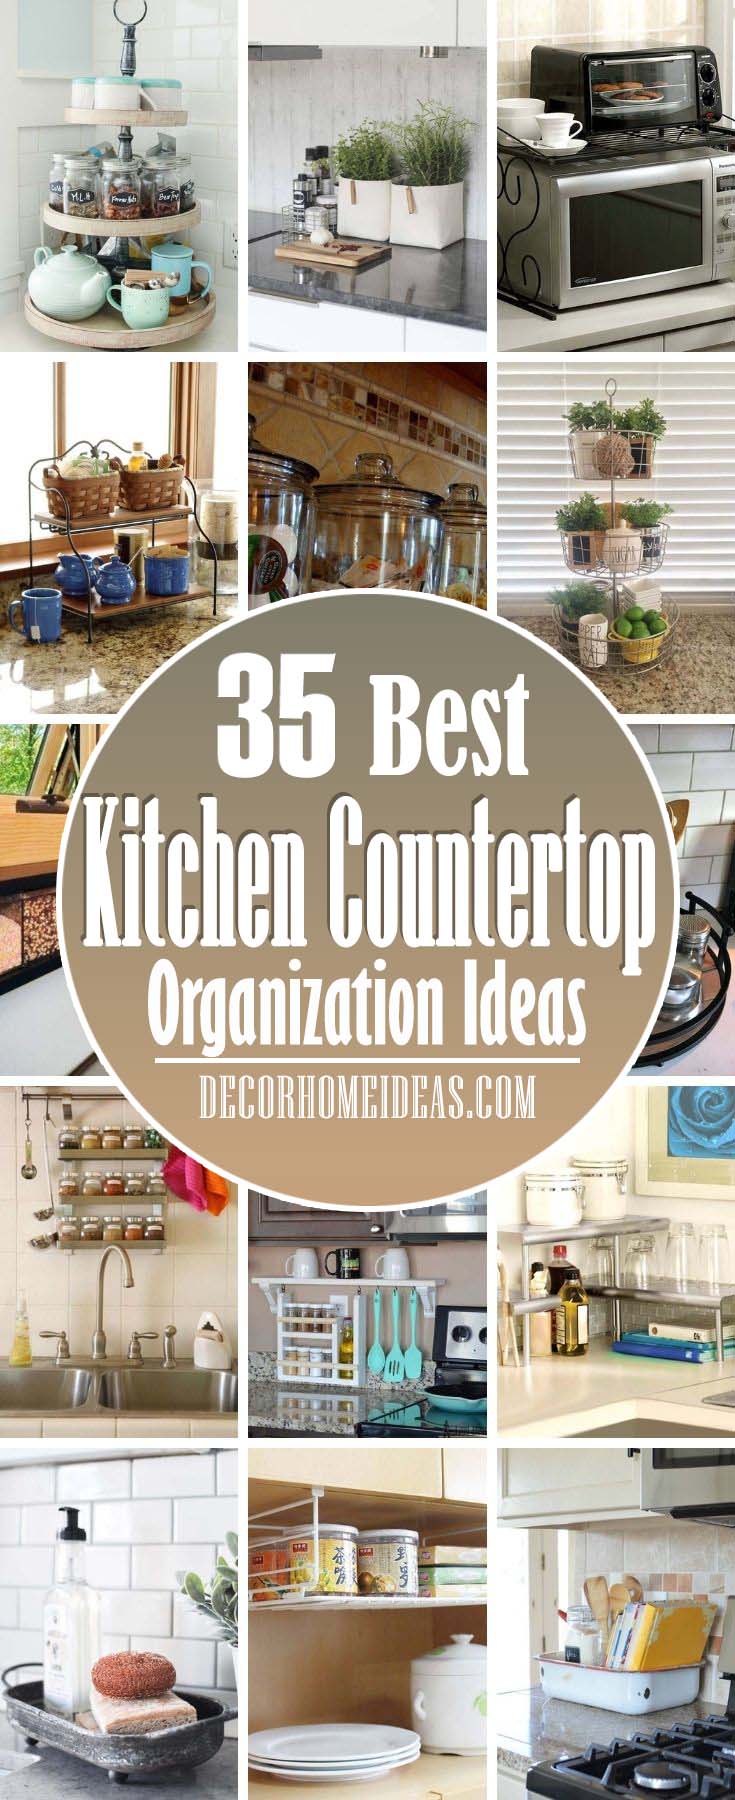 https://www.decorhomeideas.com/wp-content/uploads/2020/10/best-kitchen-countertop-organization-ideas.jpg